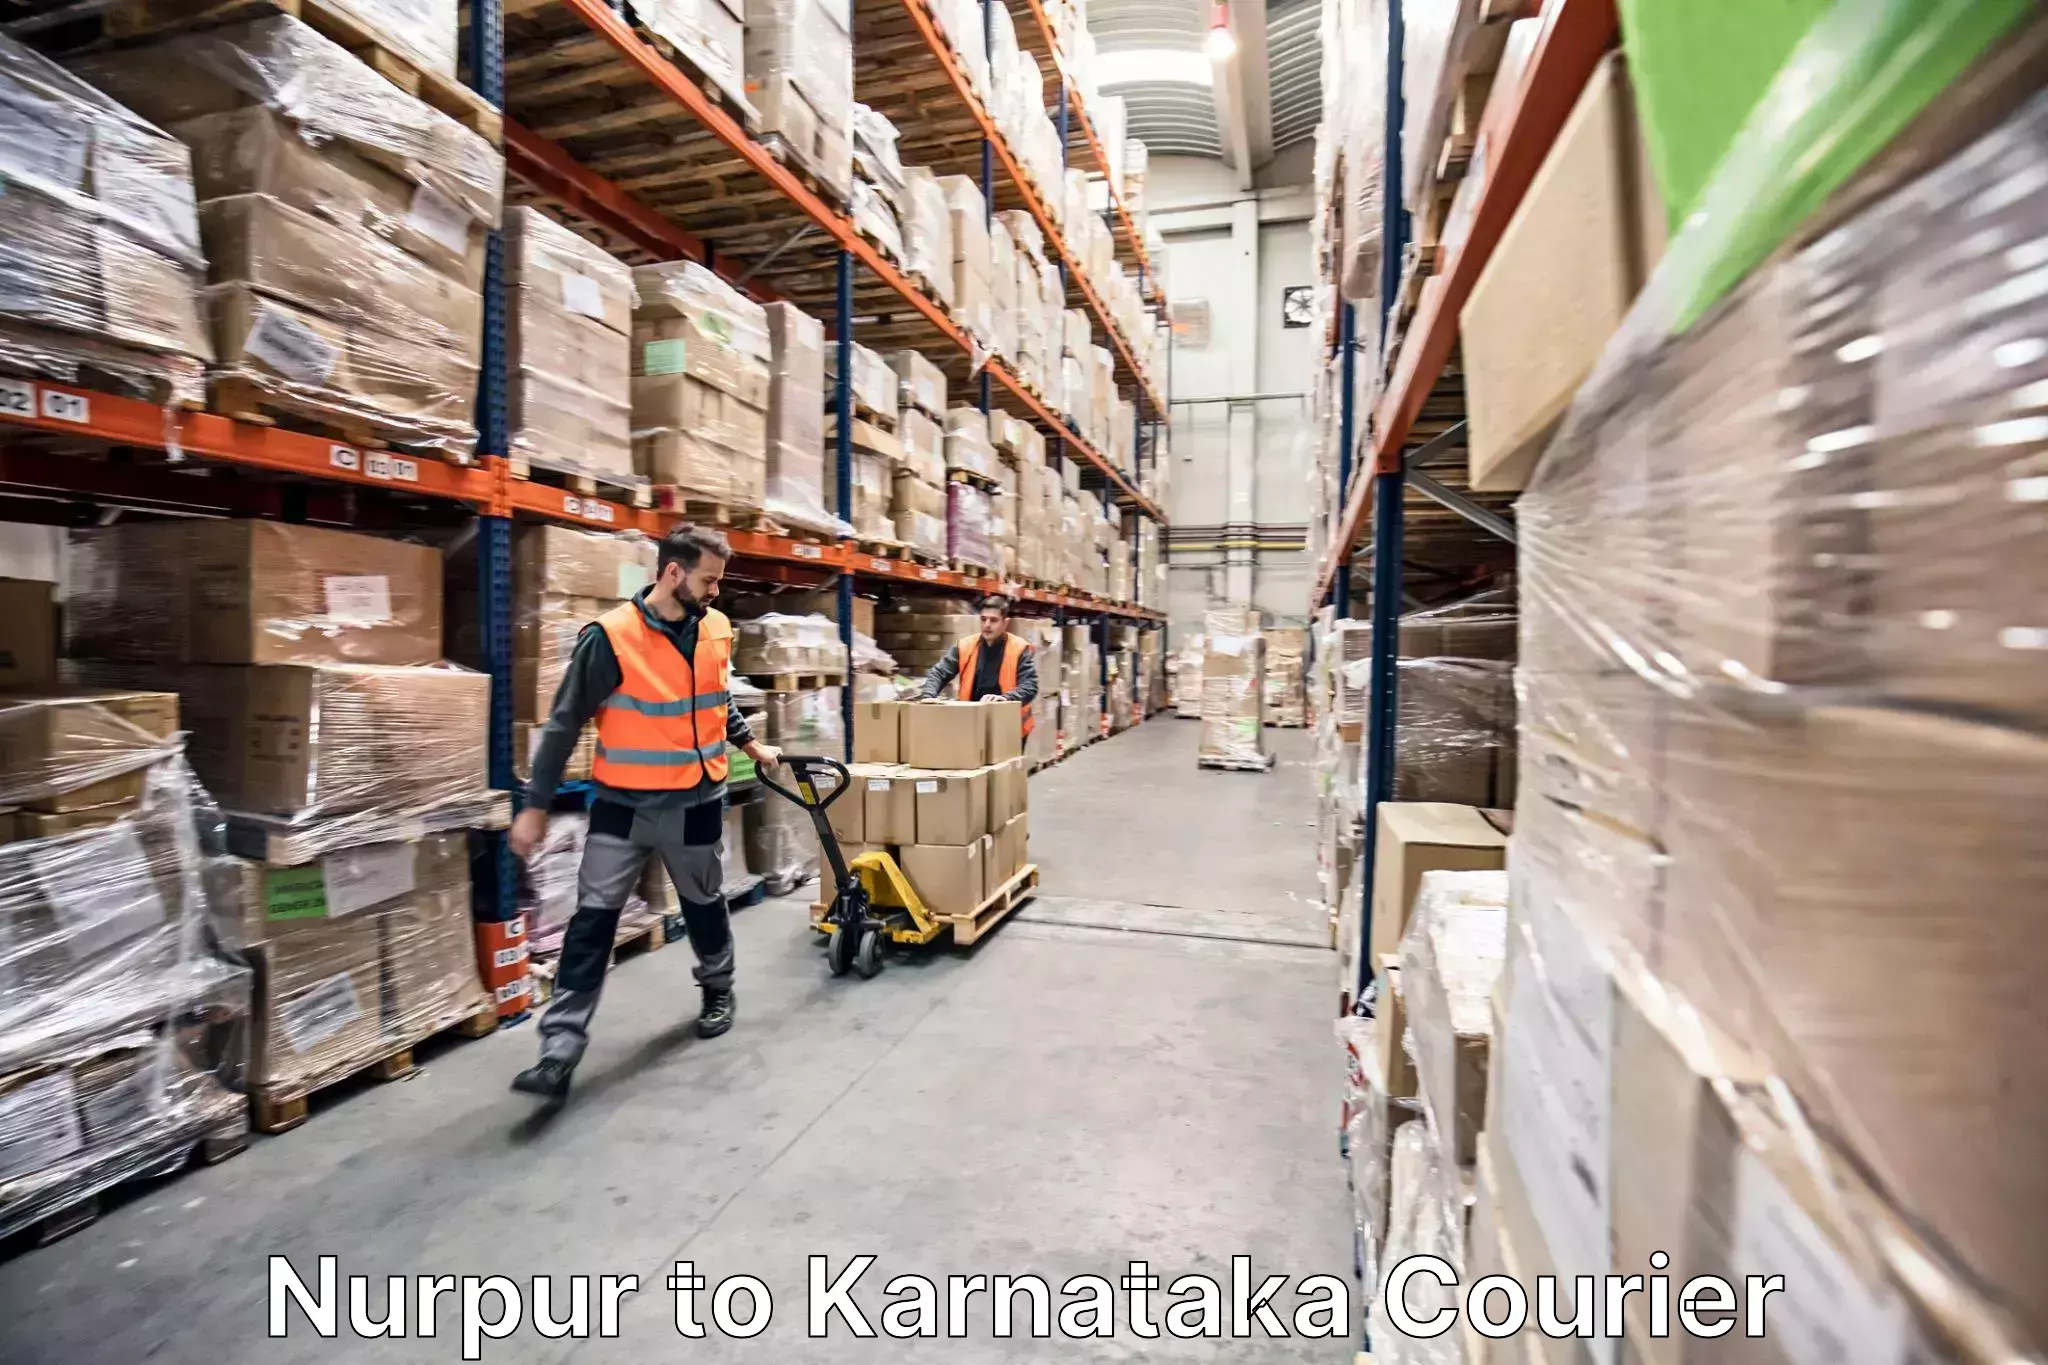 Professional moving assistance in Nurpur to Karnataka